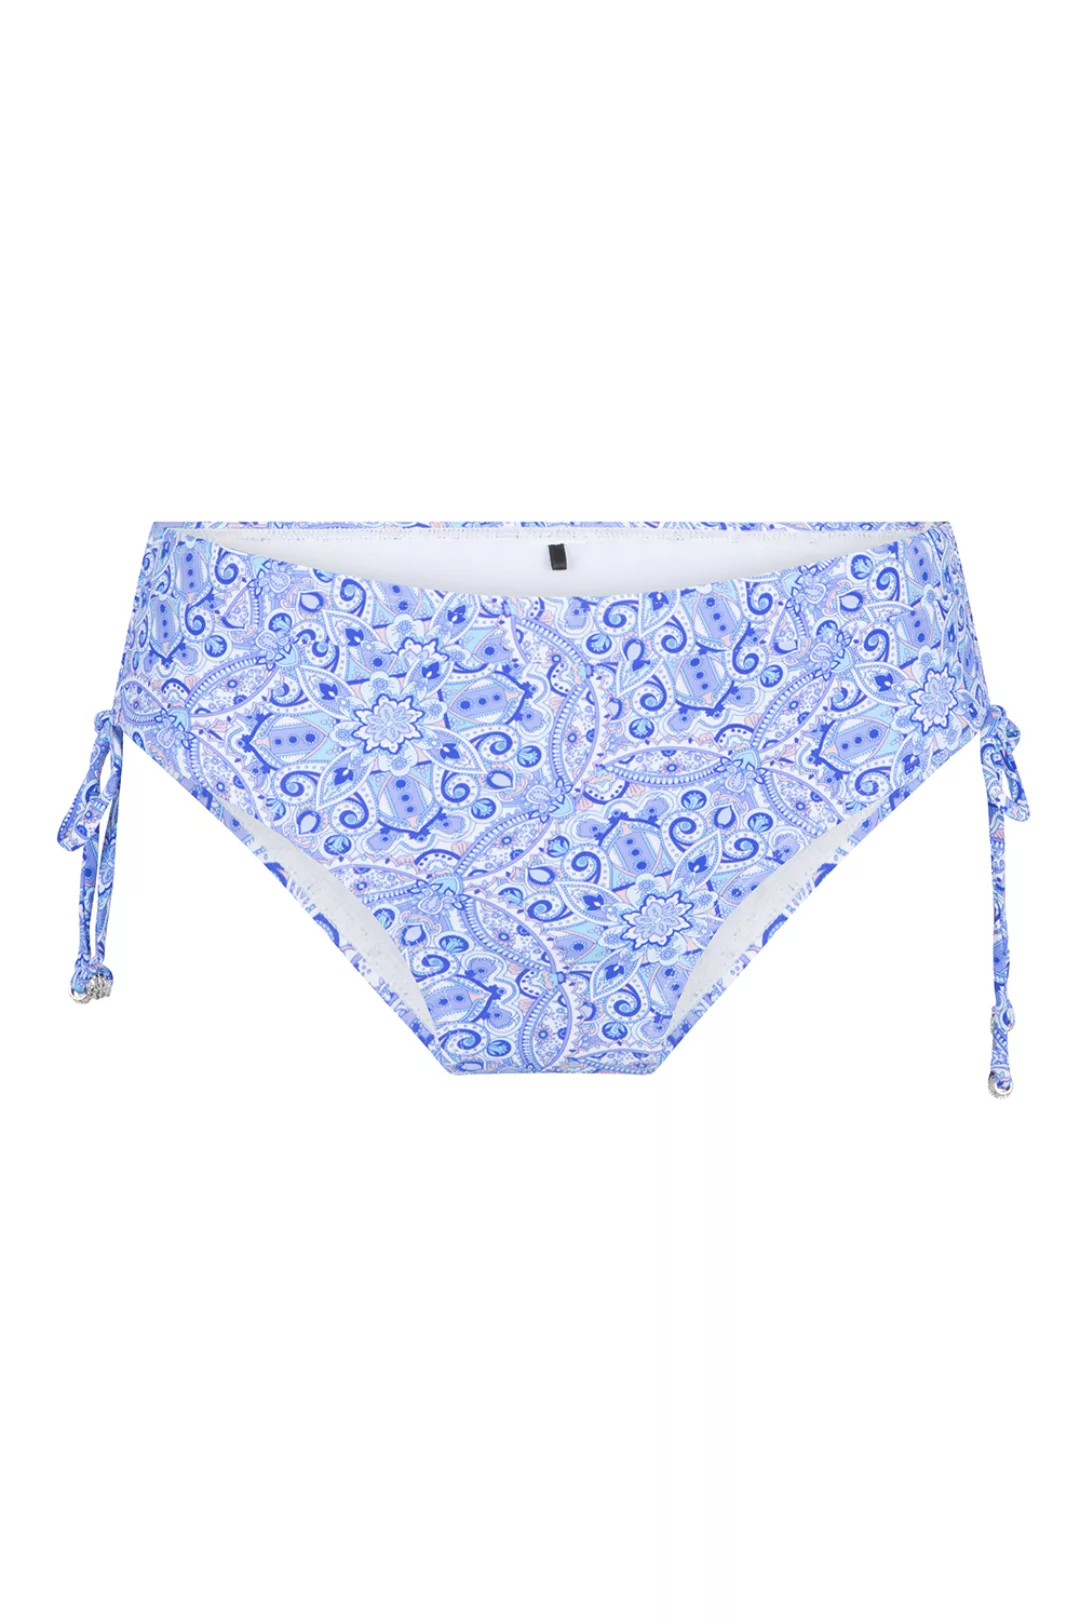 LingaDore Bikini Shorty Blue Paisley 38 blau günstig online kaufen